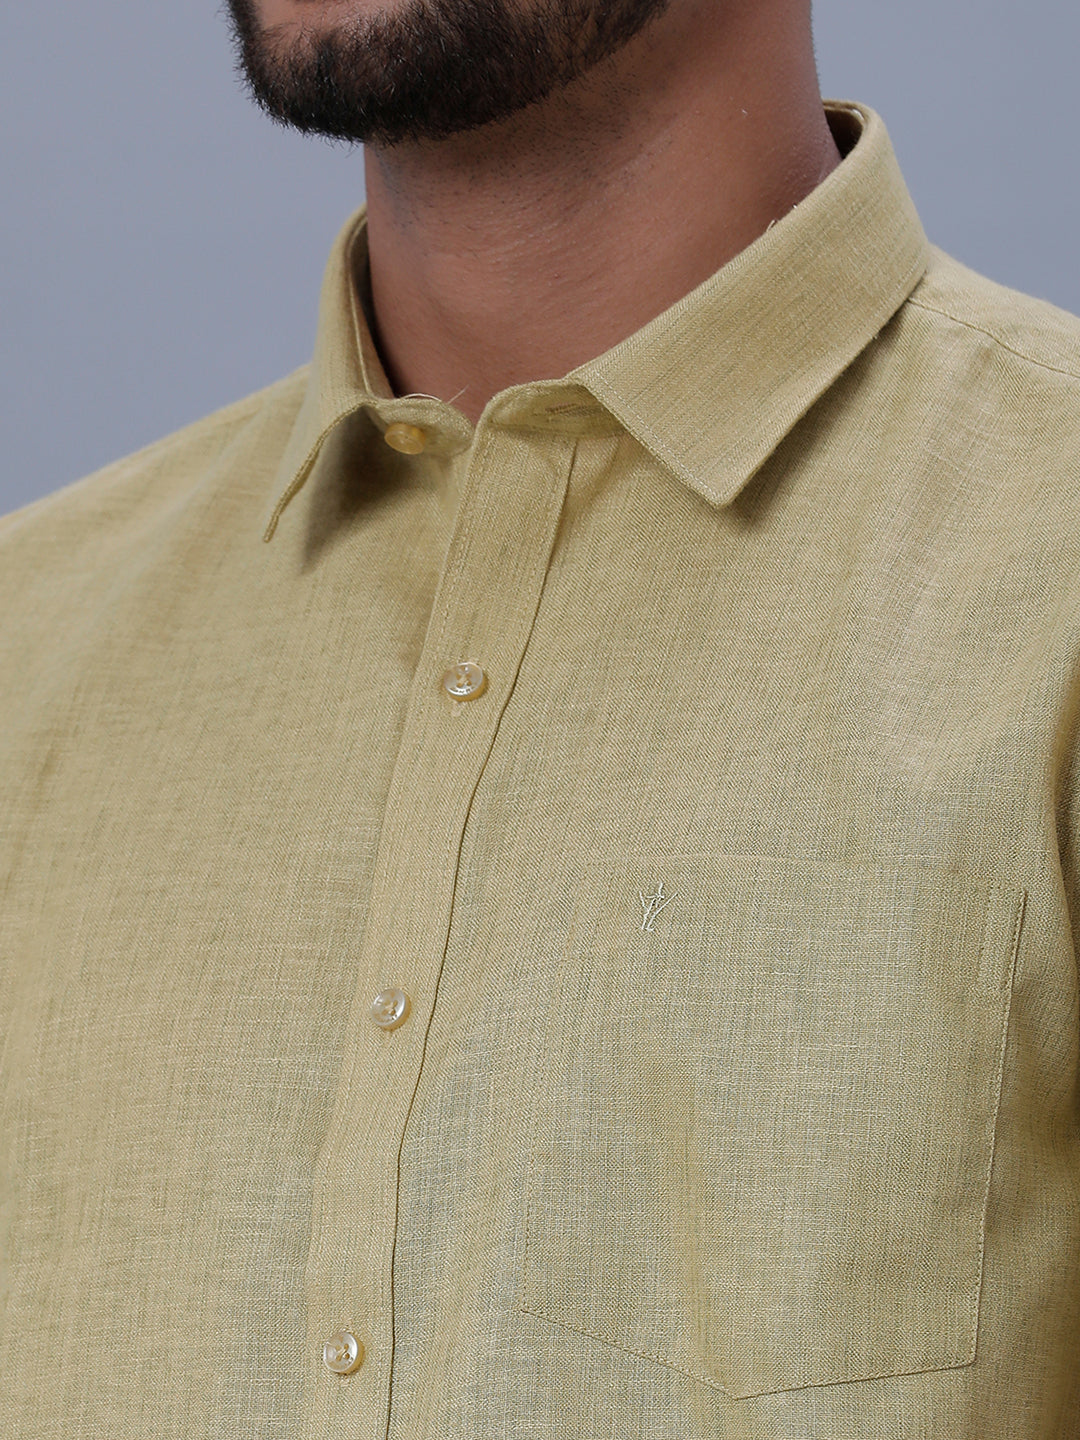 Mens Formal Shirt Half Sleeves Chutney Green T26 TB1-Zoom view